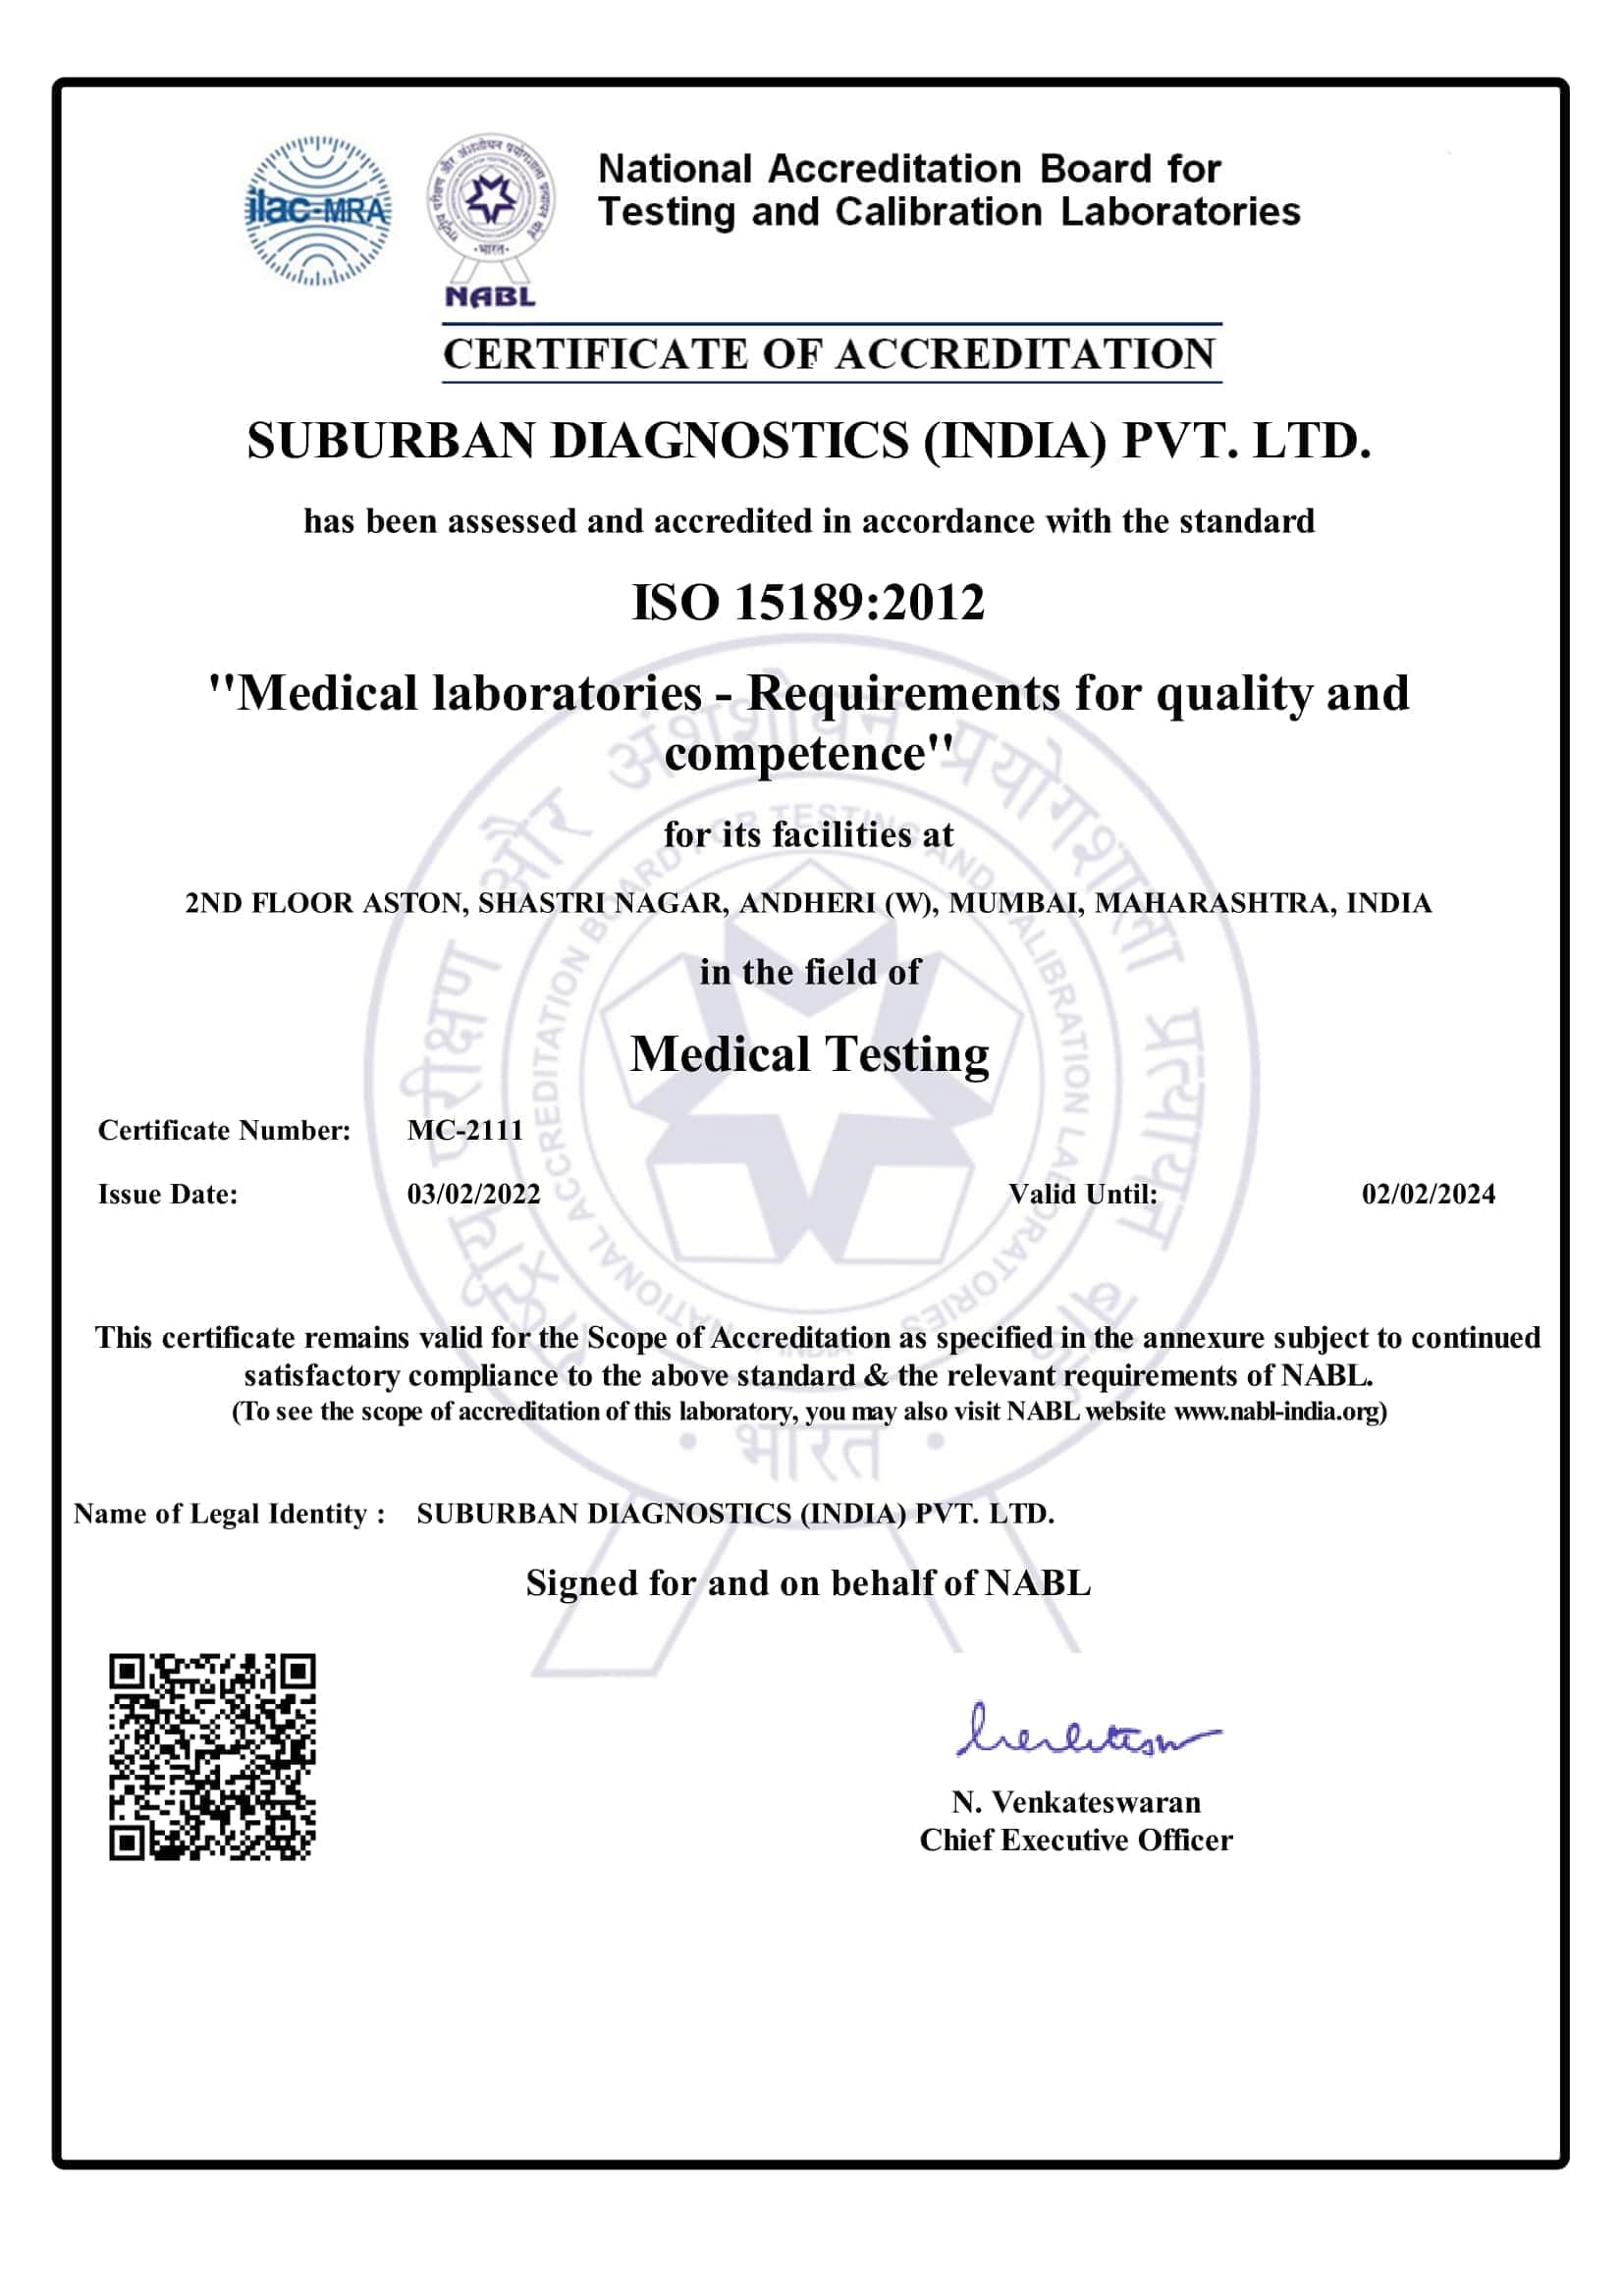 Accreditation Certificate for Mumbai Lab